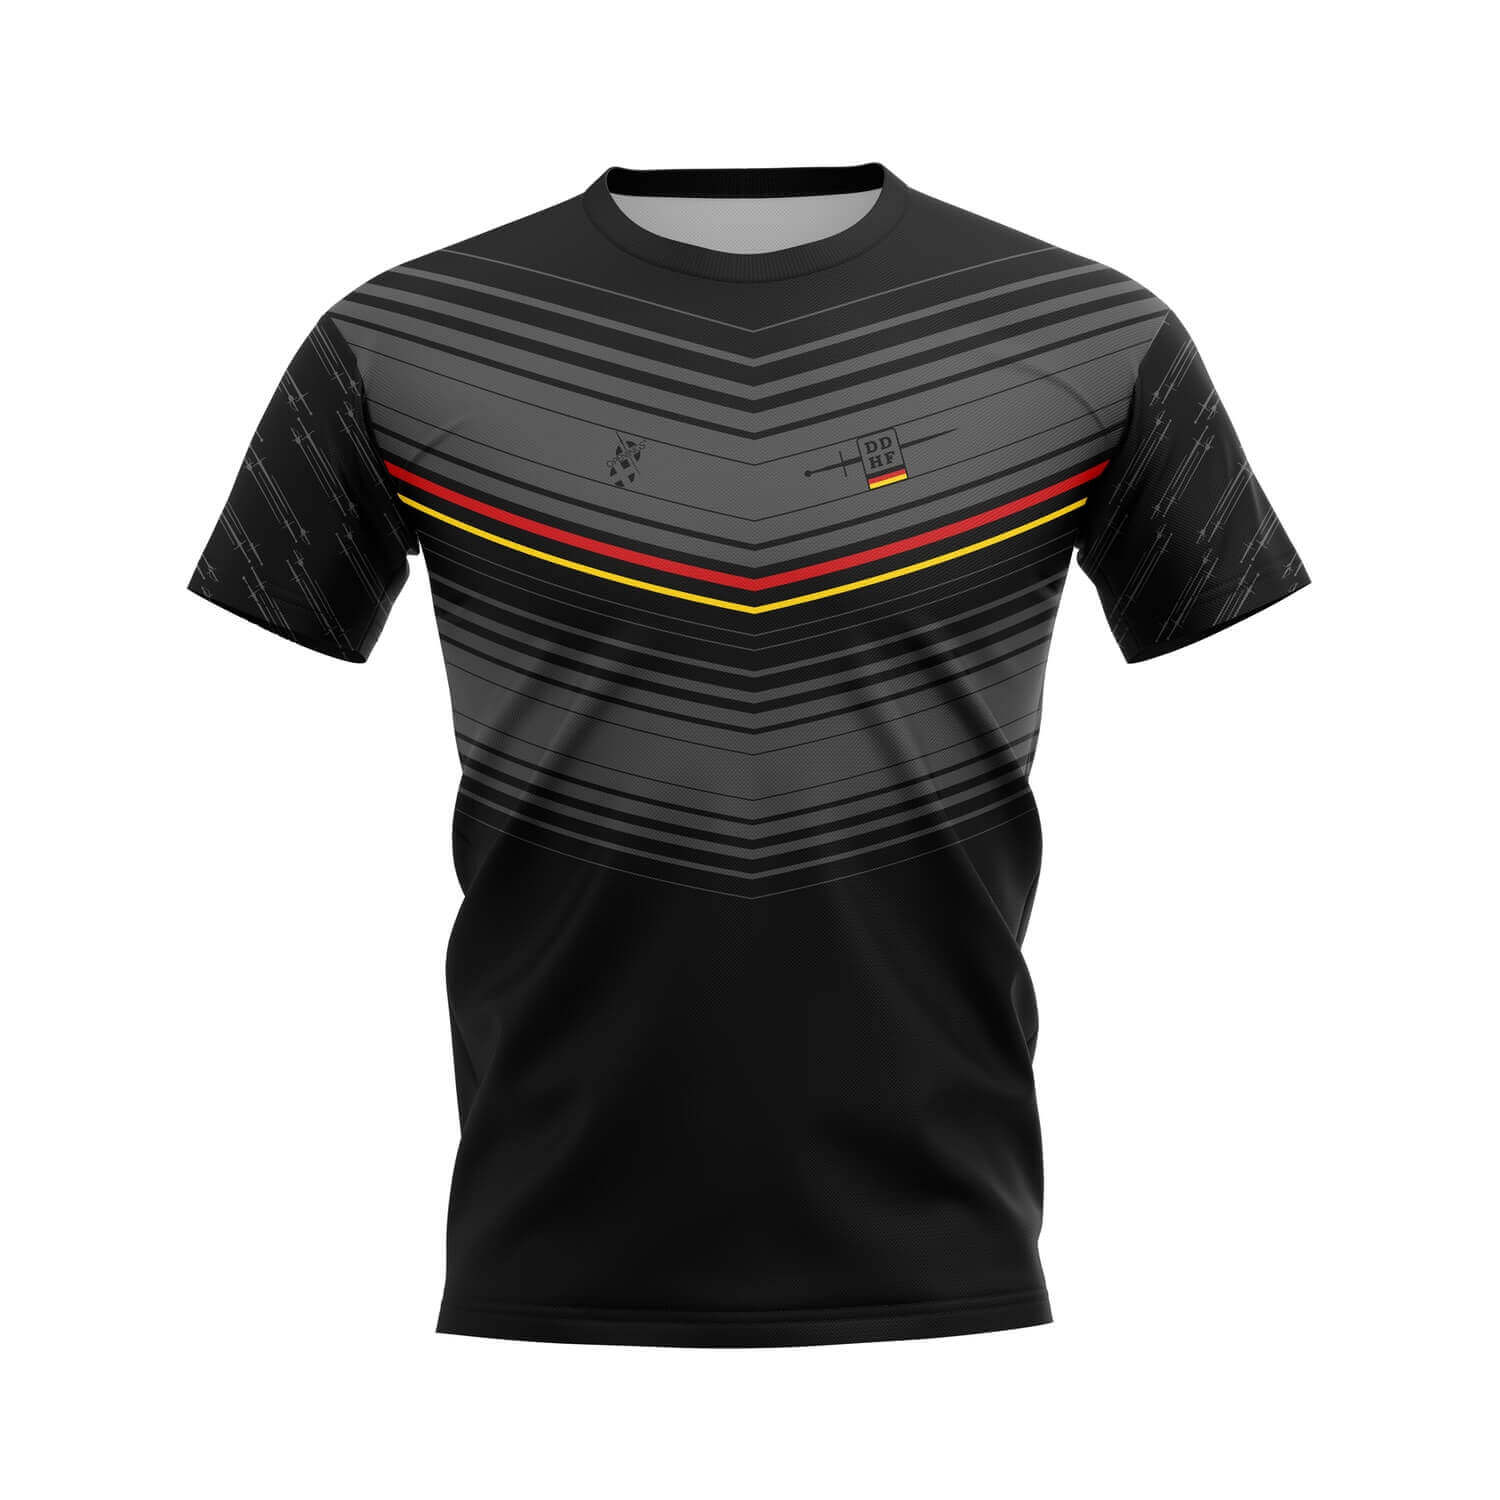 DDHF Kader - Technical Shirt Männer